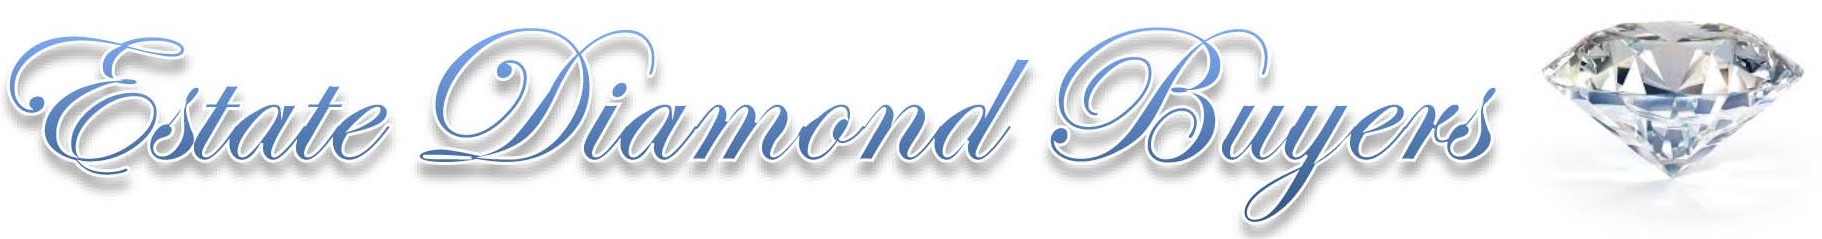 Estate Diamond Buyers Logo.